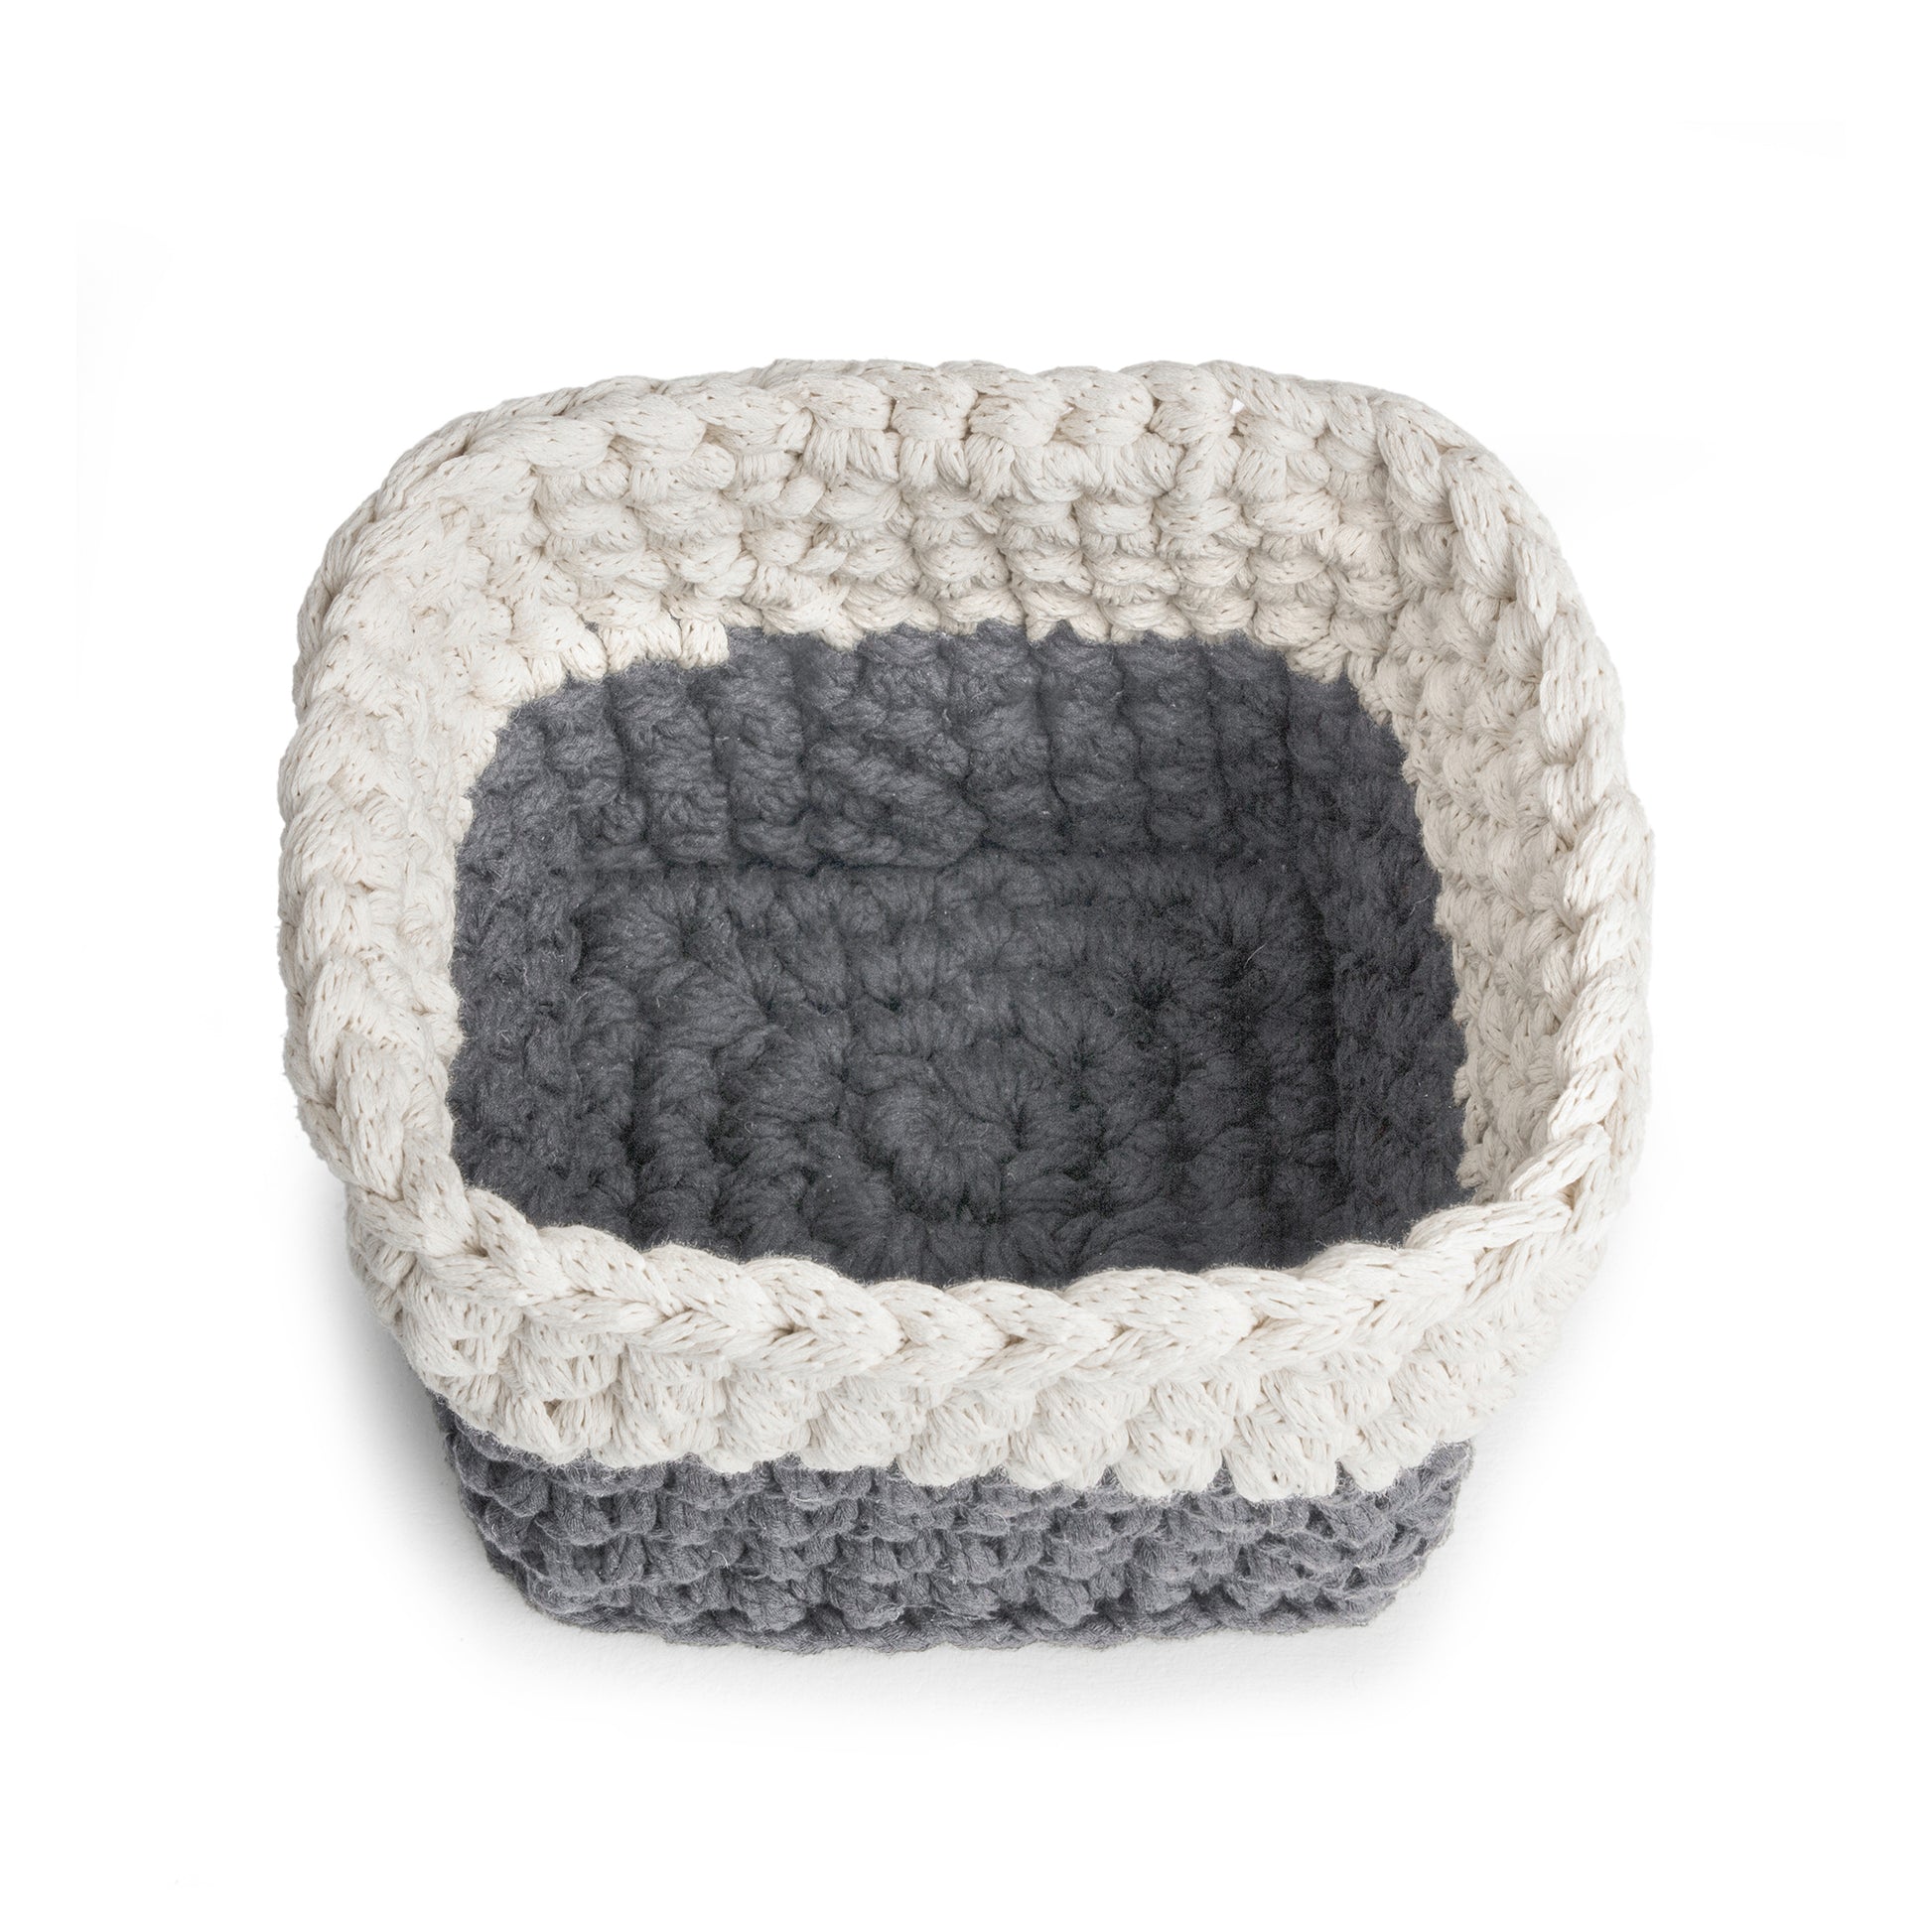 Vaso de crochê Bicolor, Cinza/Cru, com fio 100% algodão. 